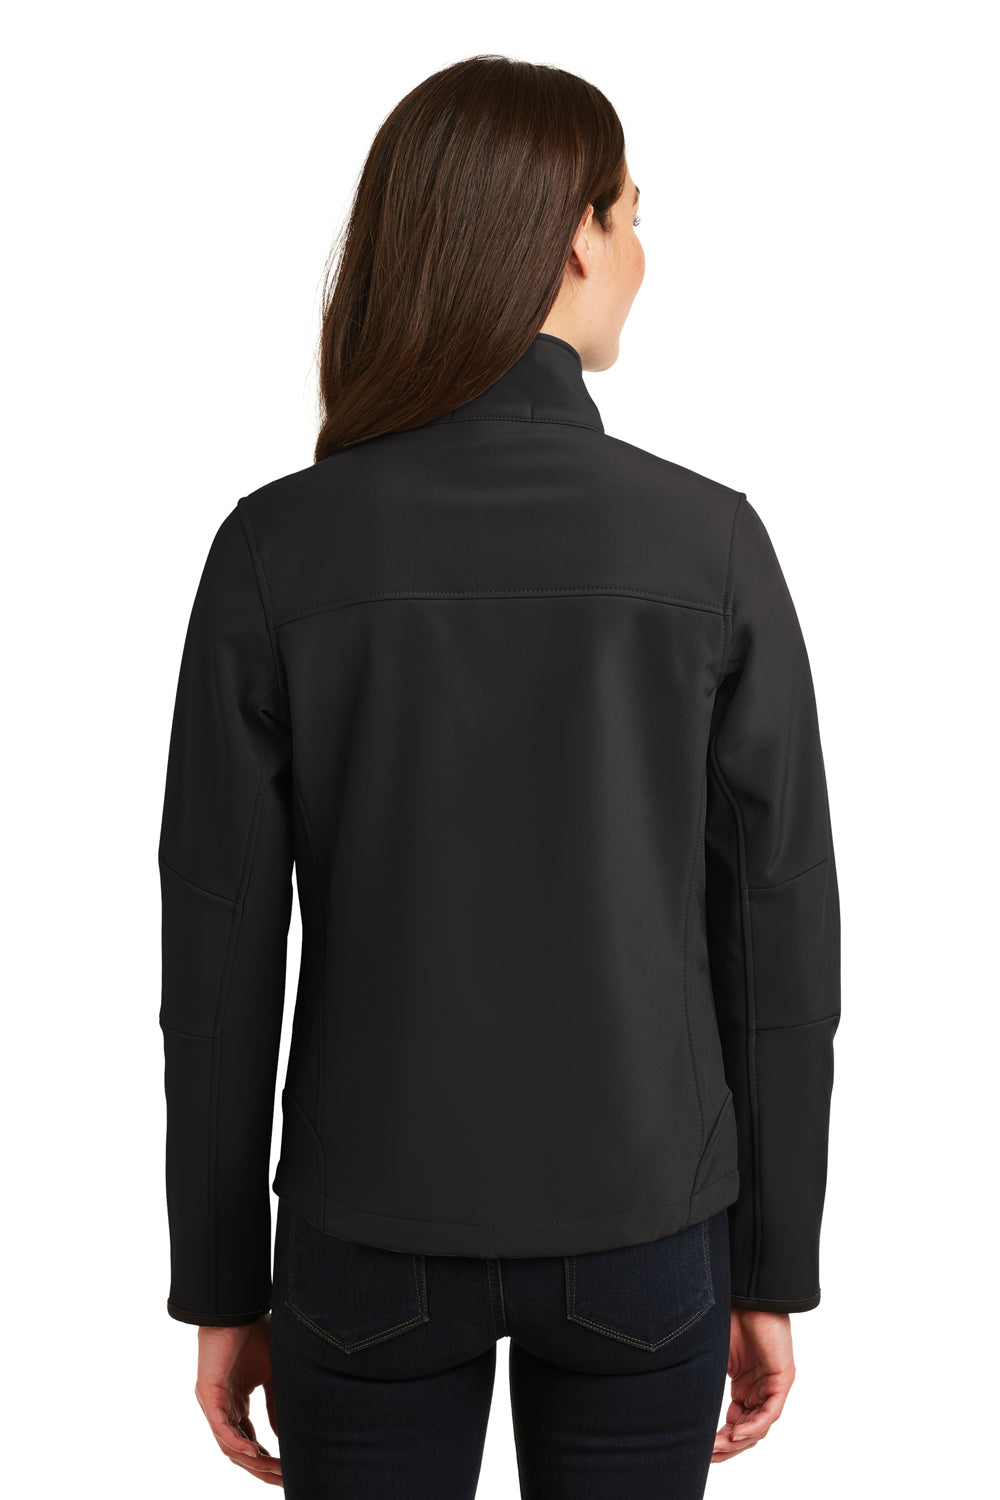 Port Authority L790 Womens Glacier Wind & Water Resistant Full Zip Jacket Black Back